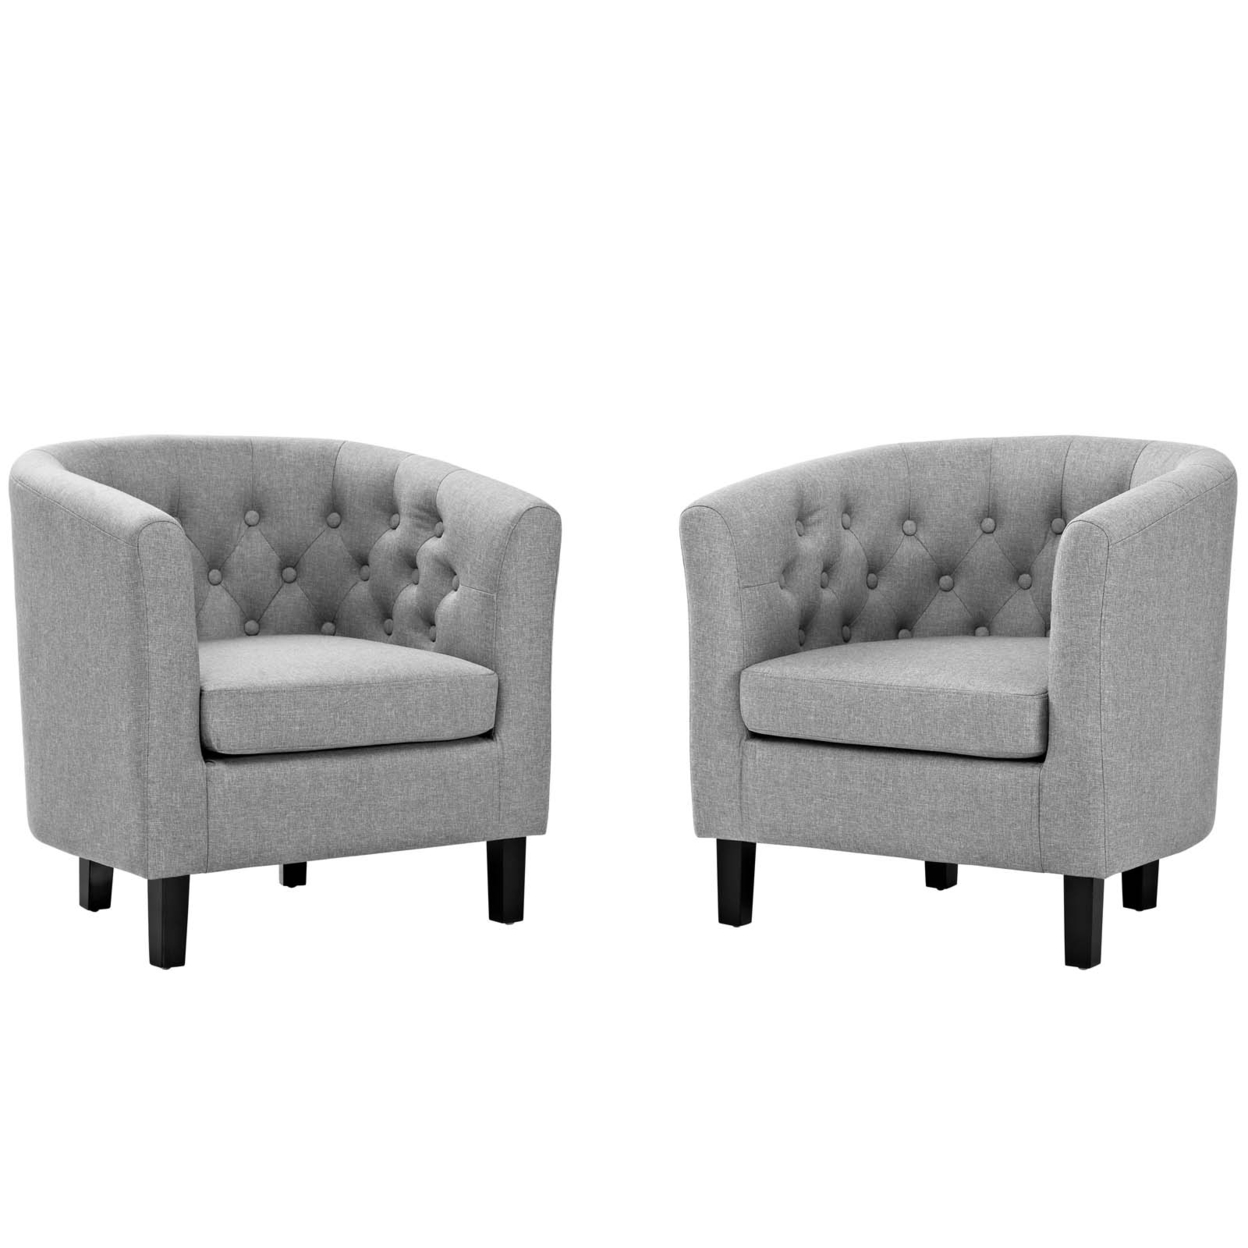 Prospect 2 Piece Upholstered Fabric Armchair Set,Light Gray